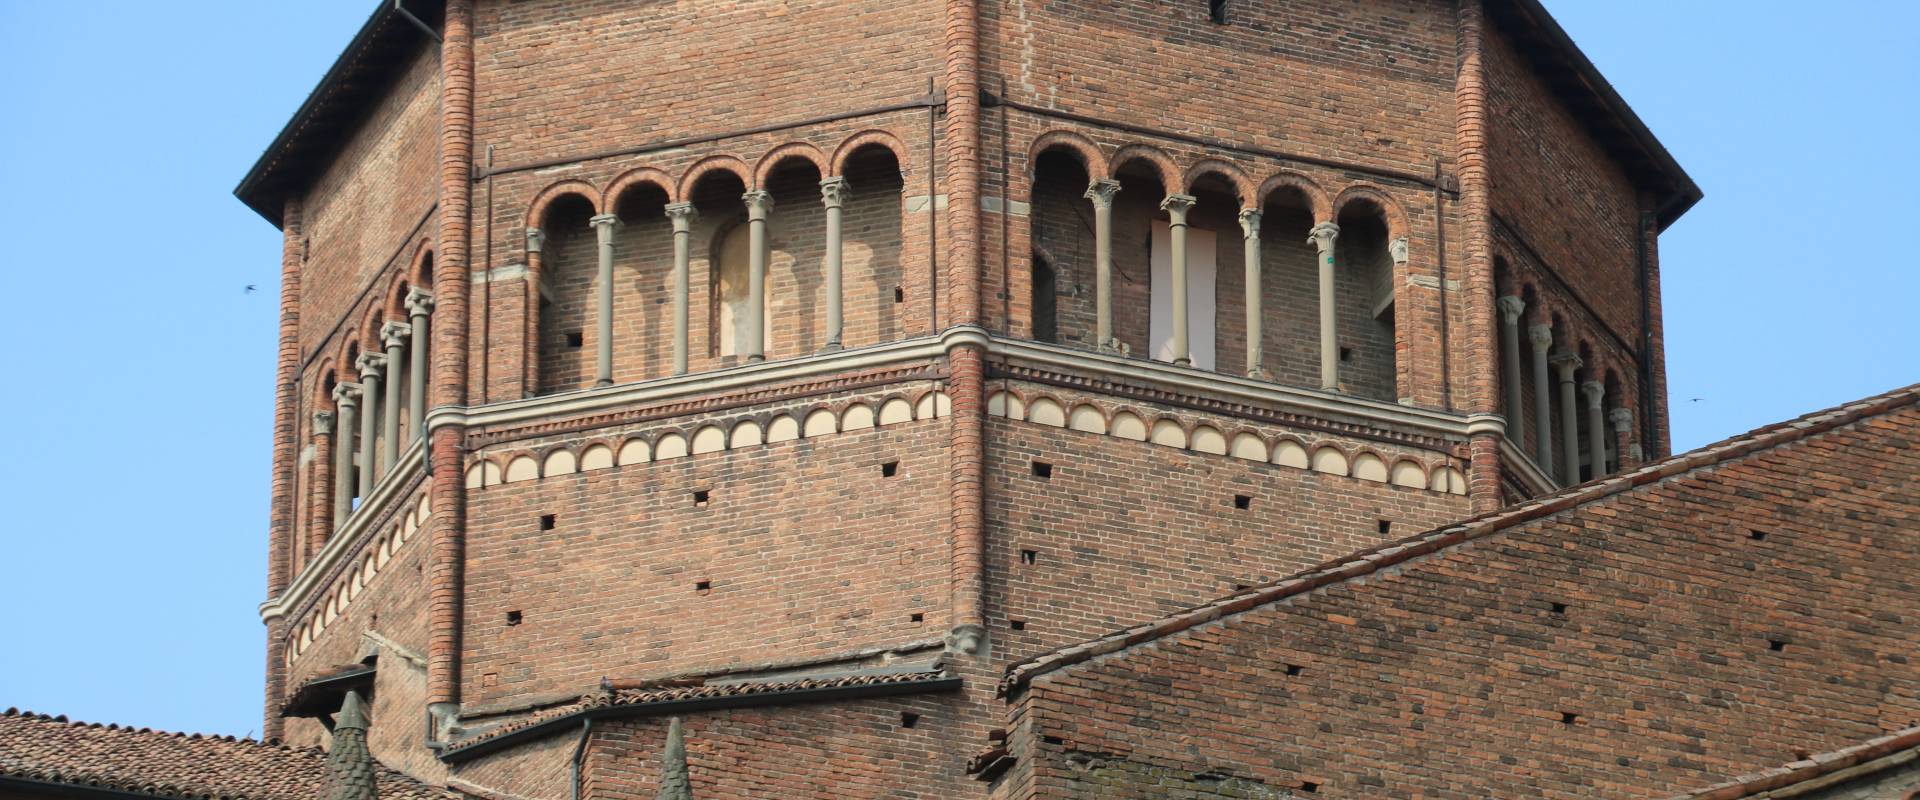 Duomo di Piacenza, tiburio 03 foto di Mongolo1984